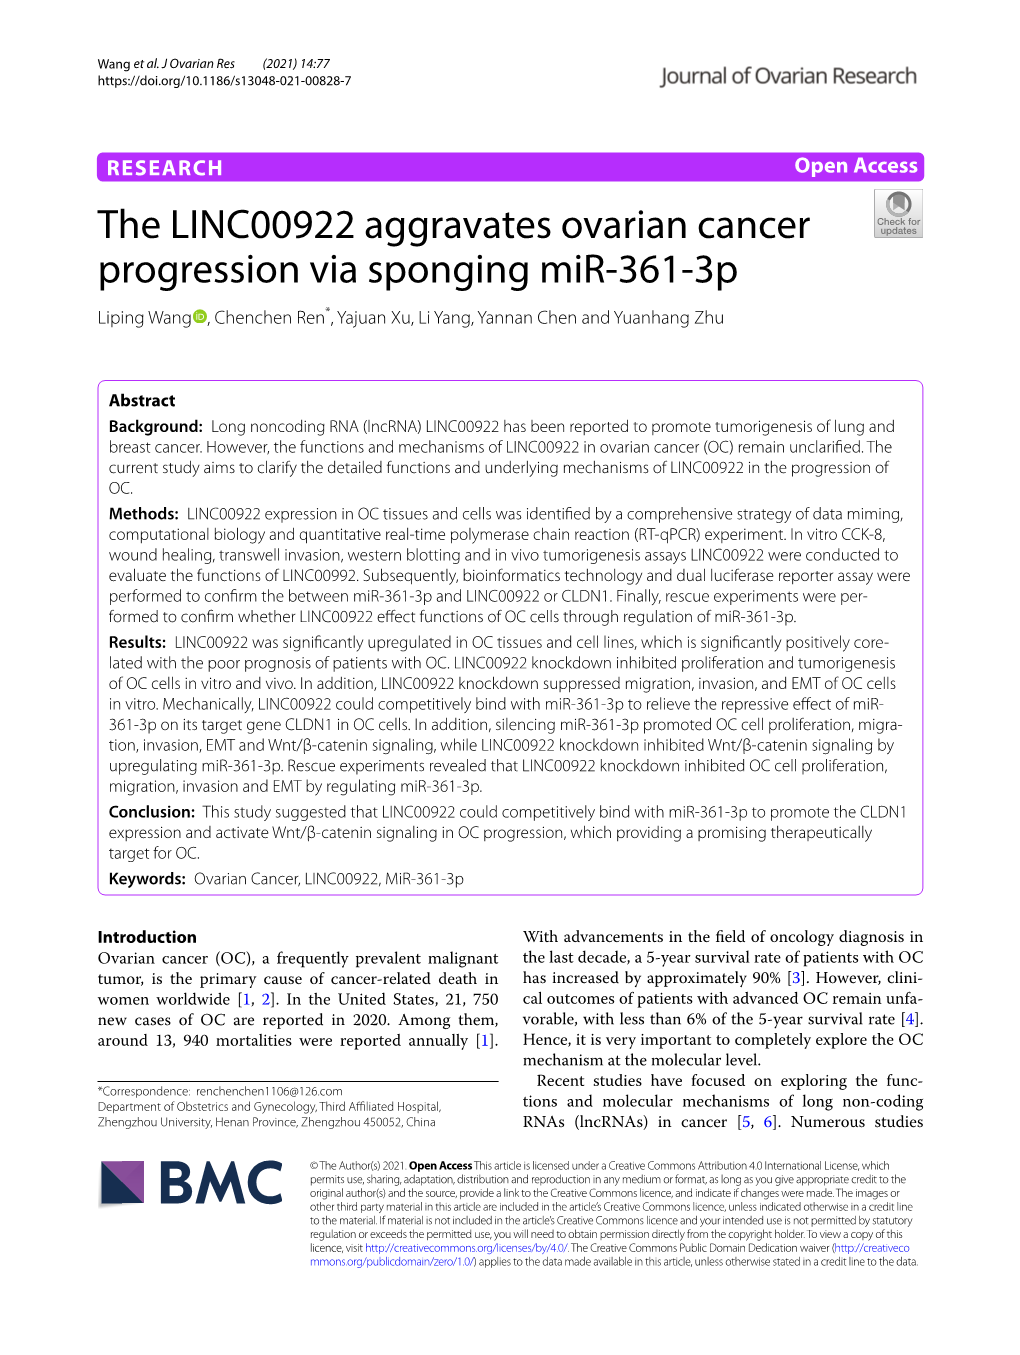 The LINC00922 Aggravates Ovarian Cancer Progression Via Sponging Mir-361-3P